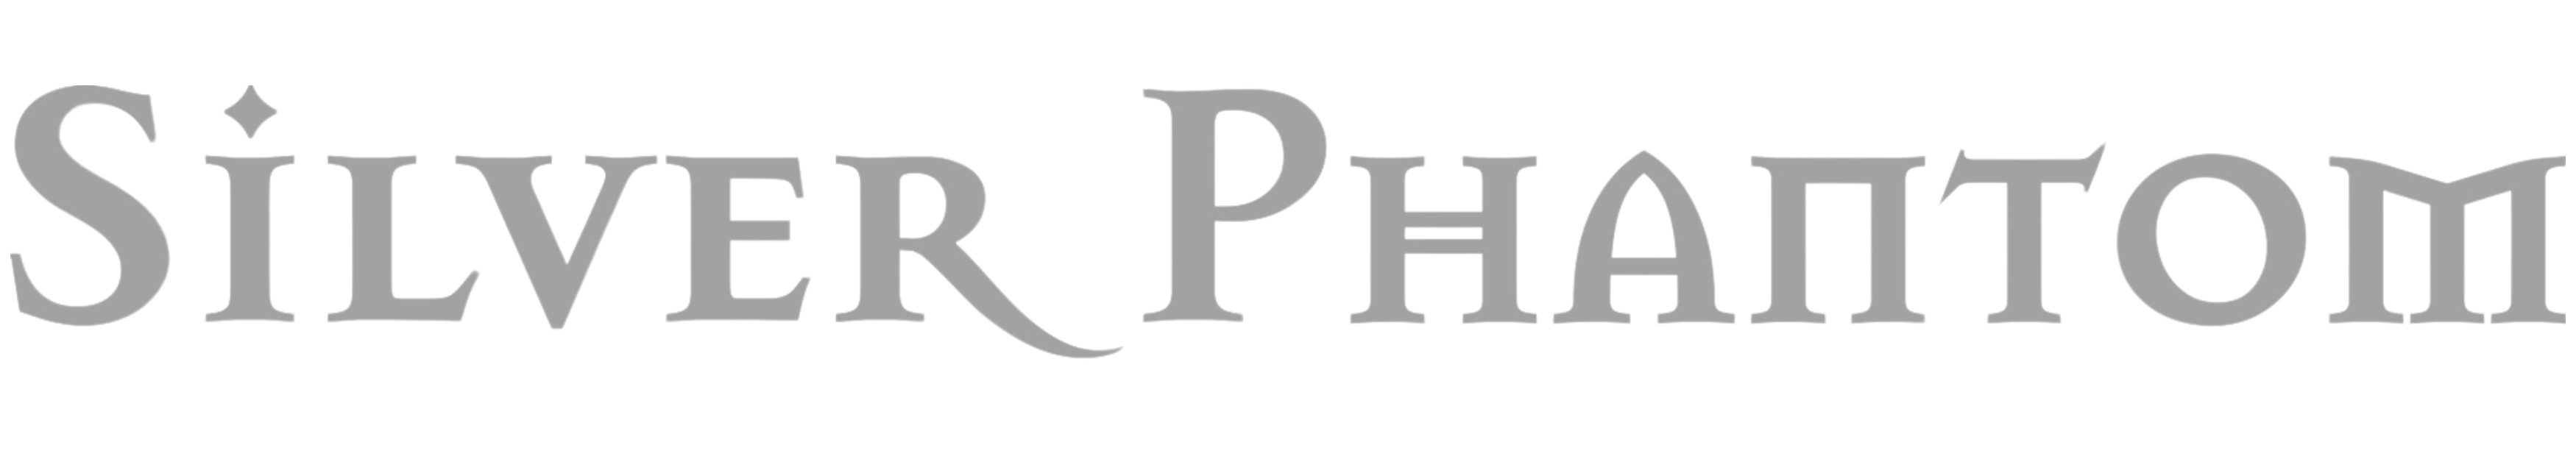 Silver Phantom logo